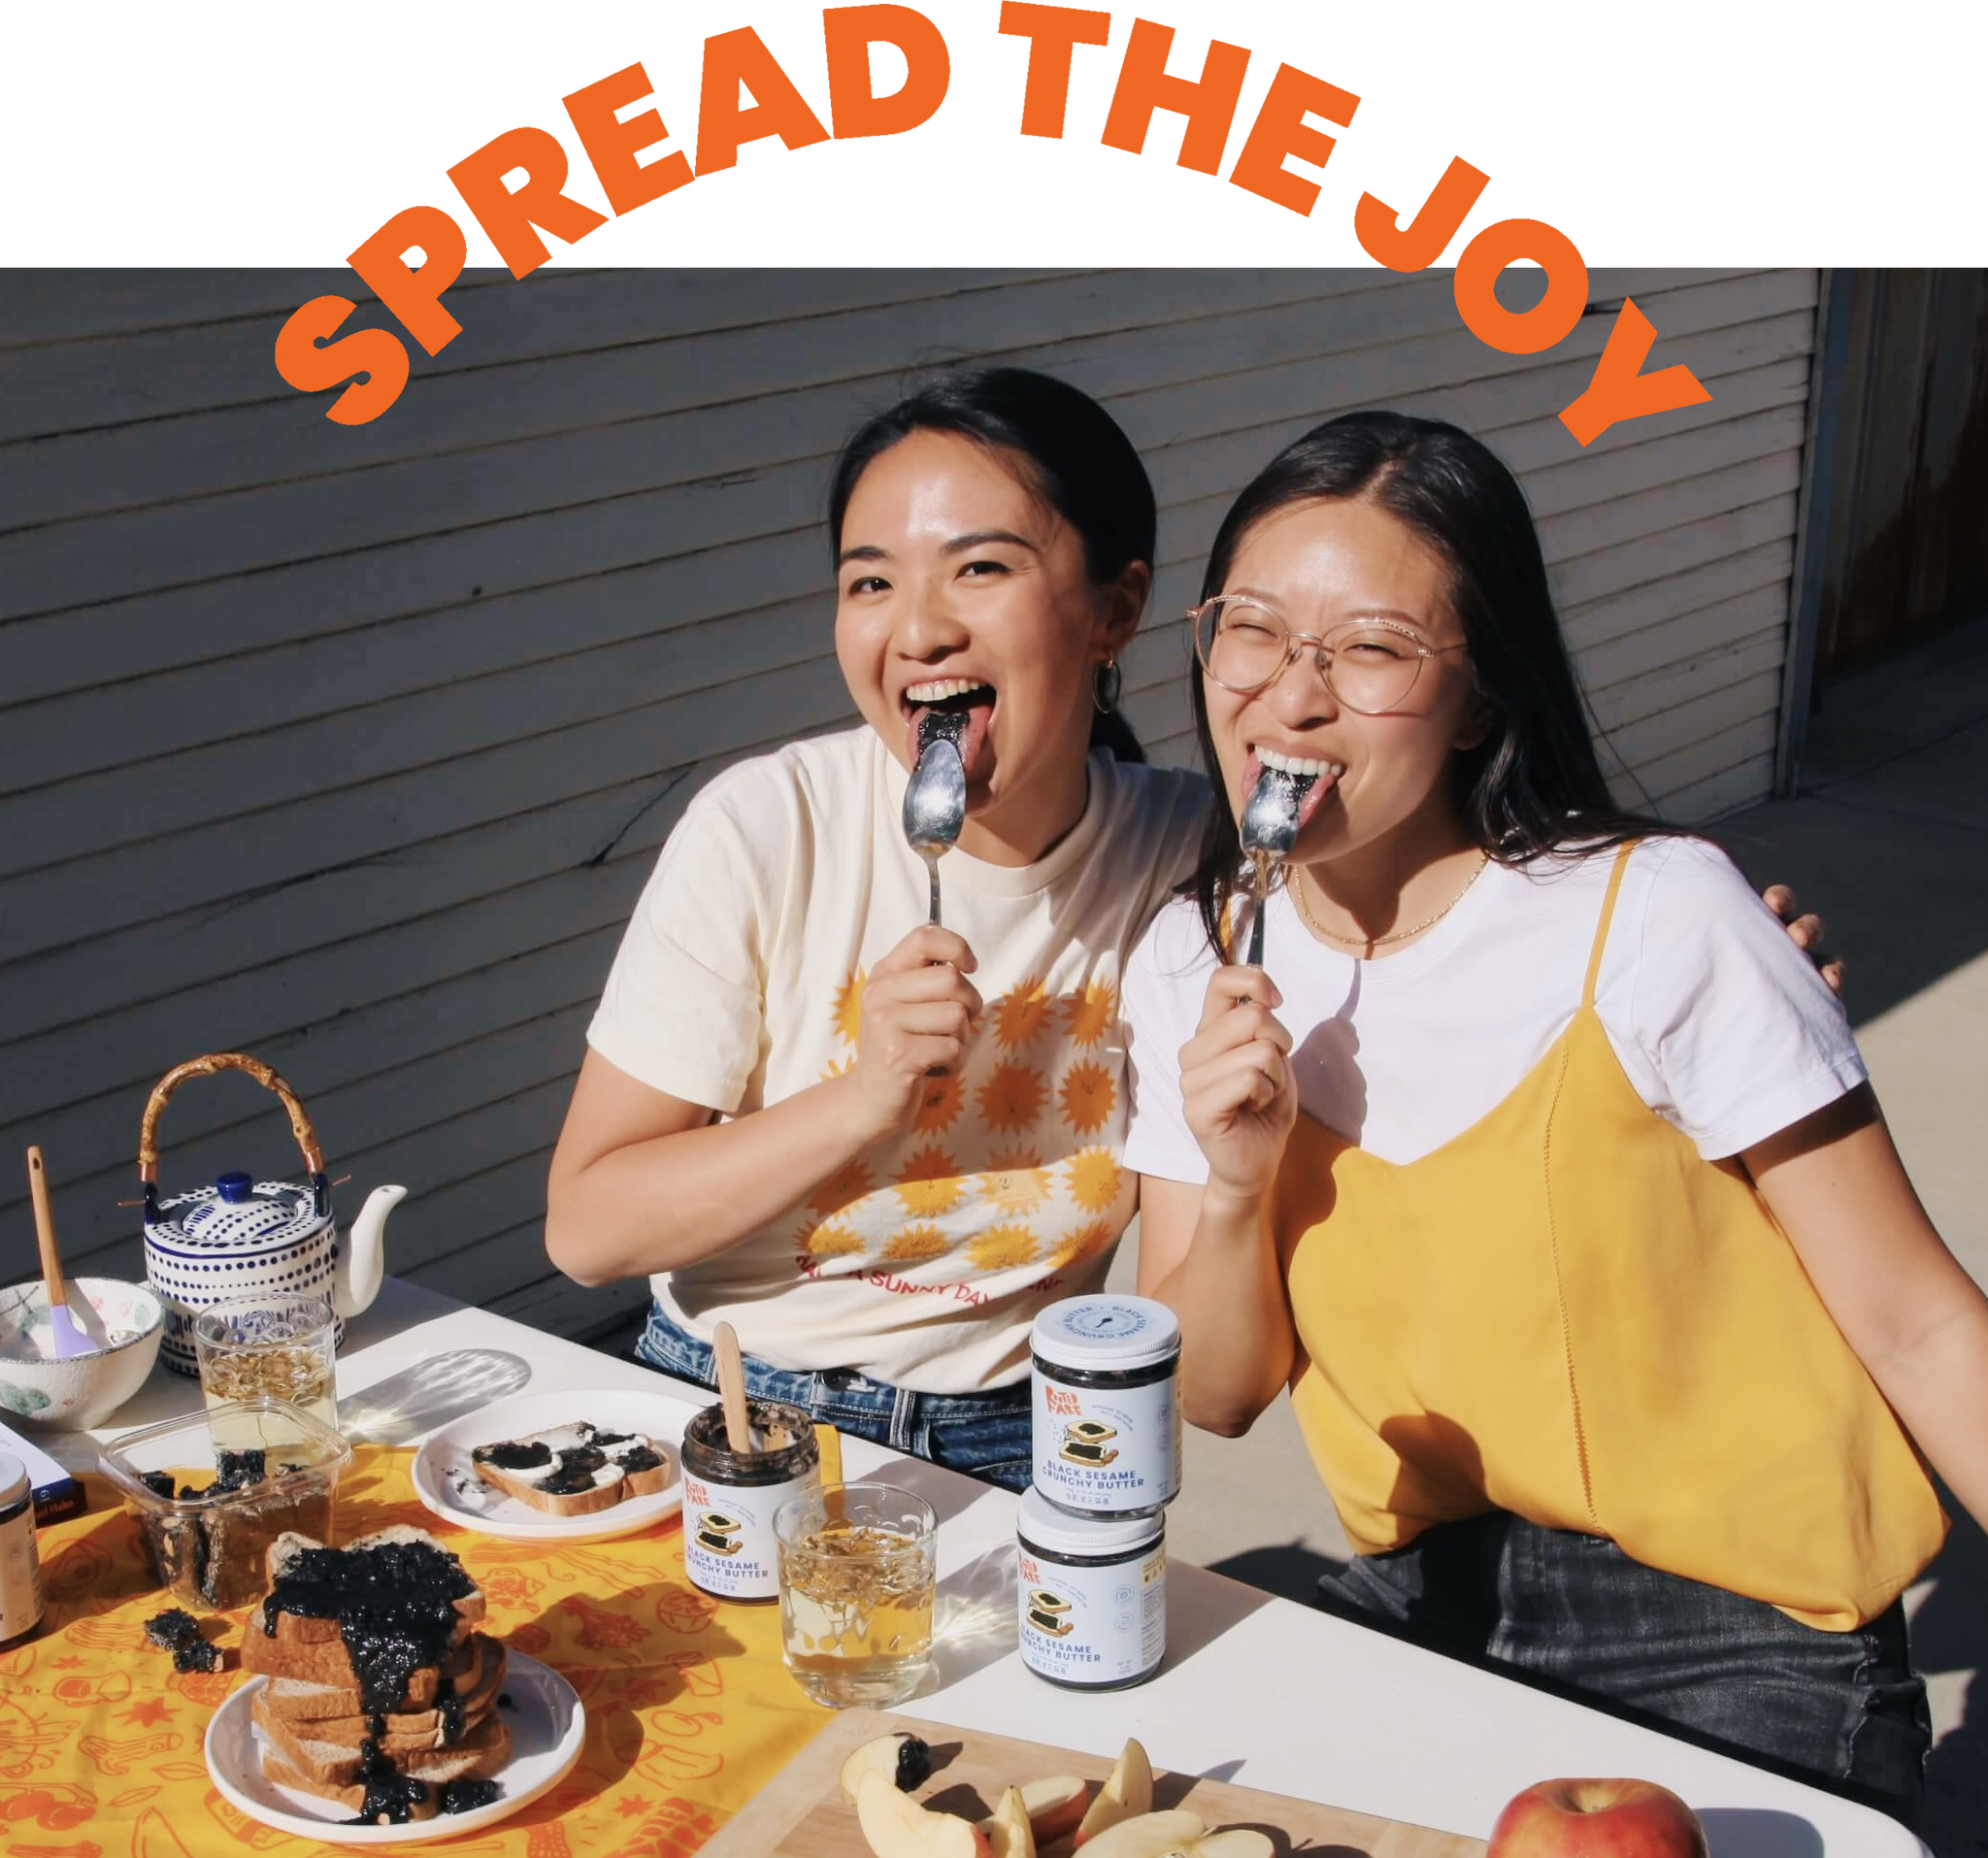 Spread the Joy | Ashley and Hedy